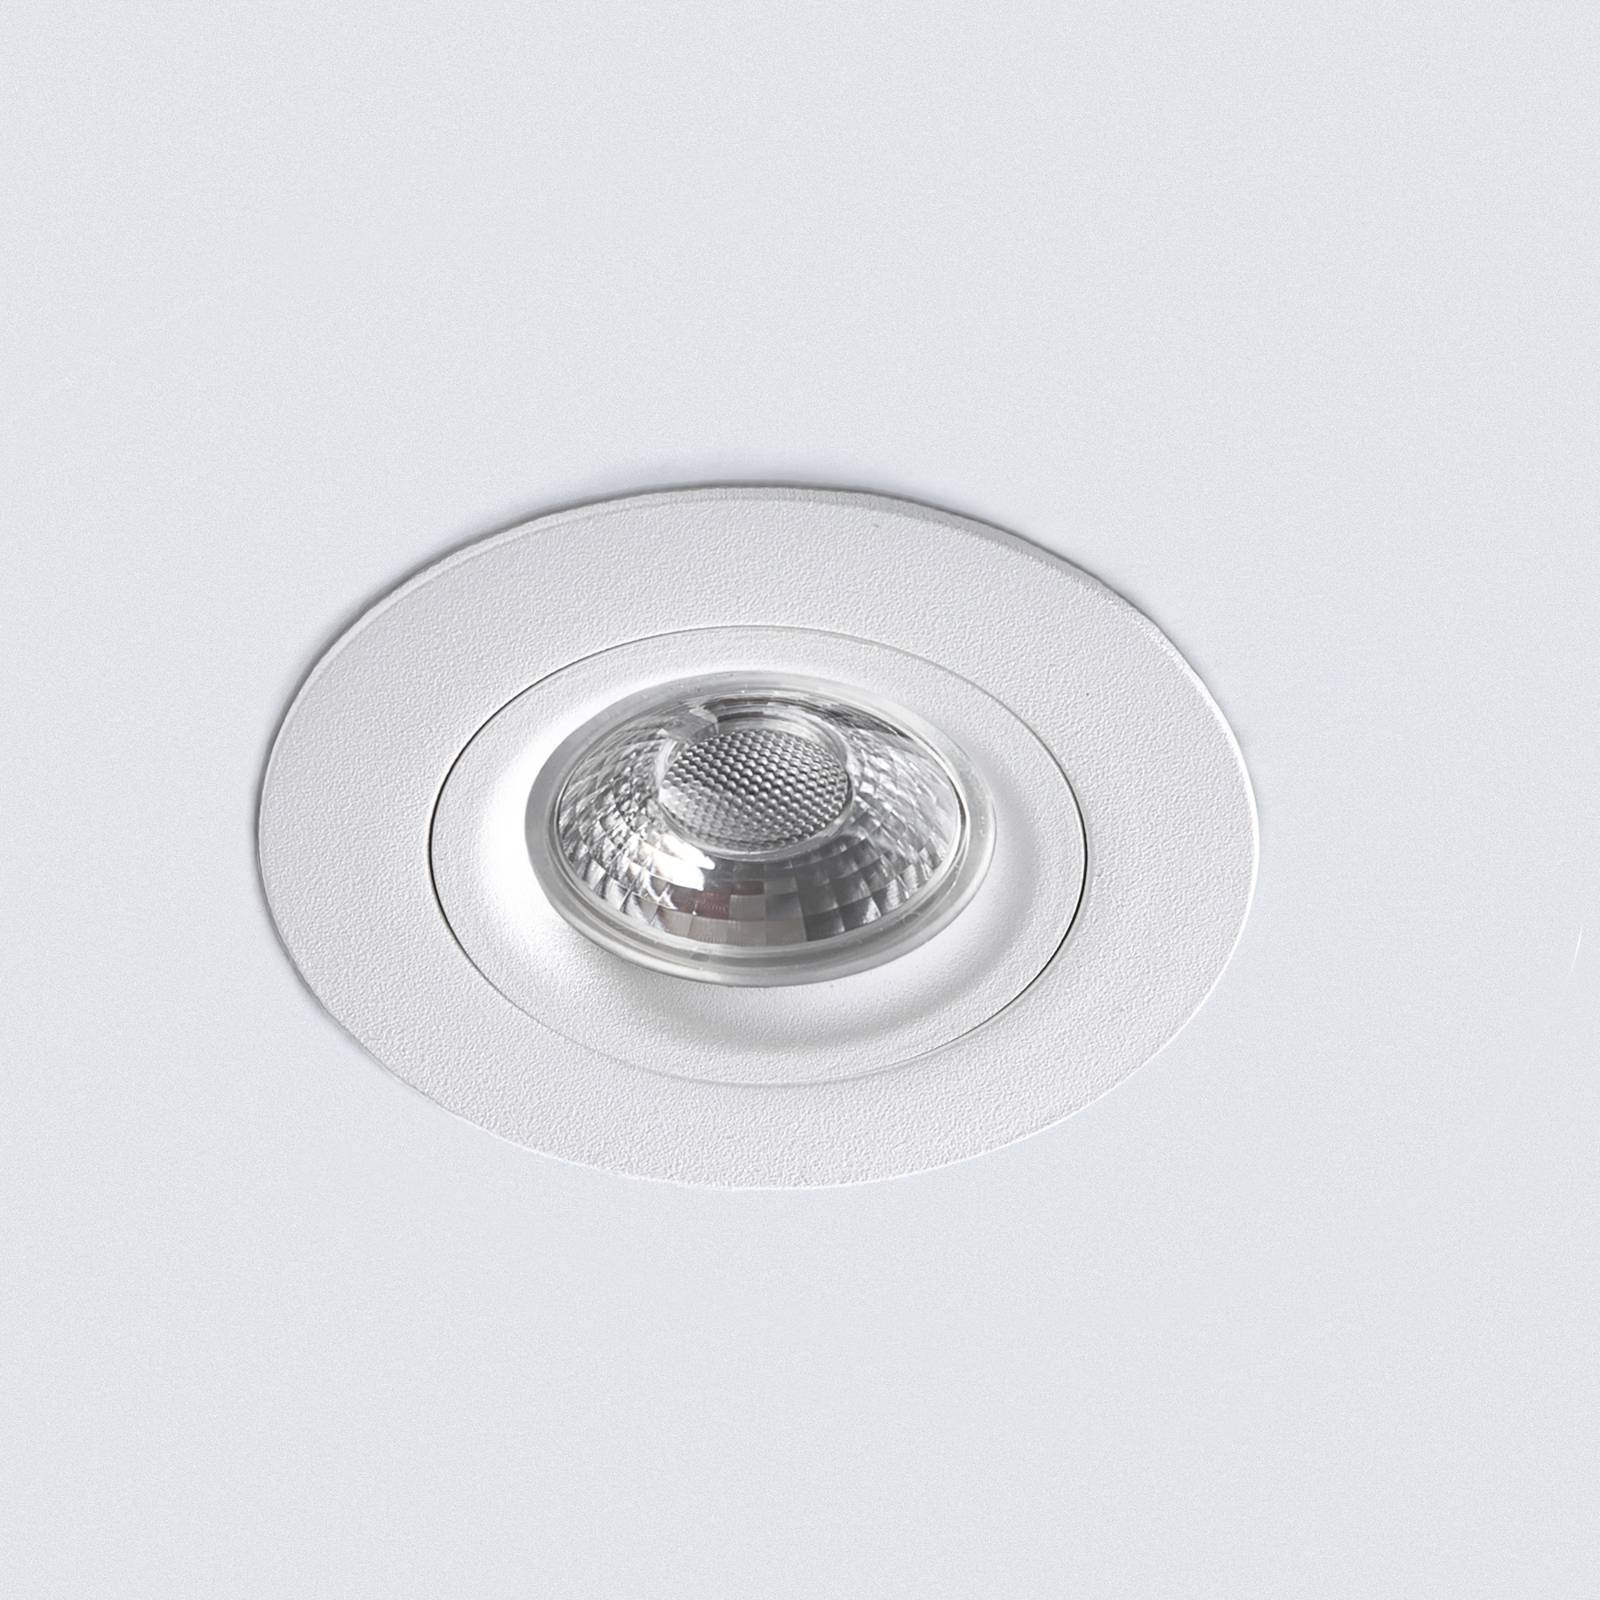 LED plafond inbouwspot DL6809, rond, wit